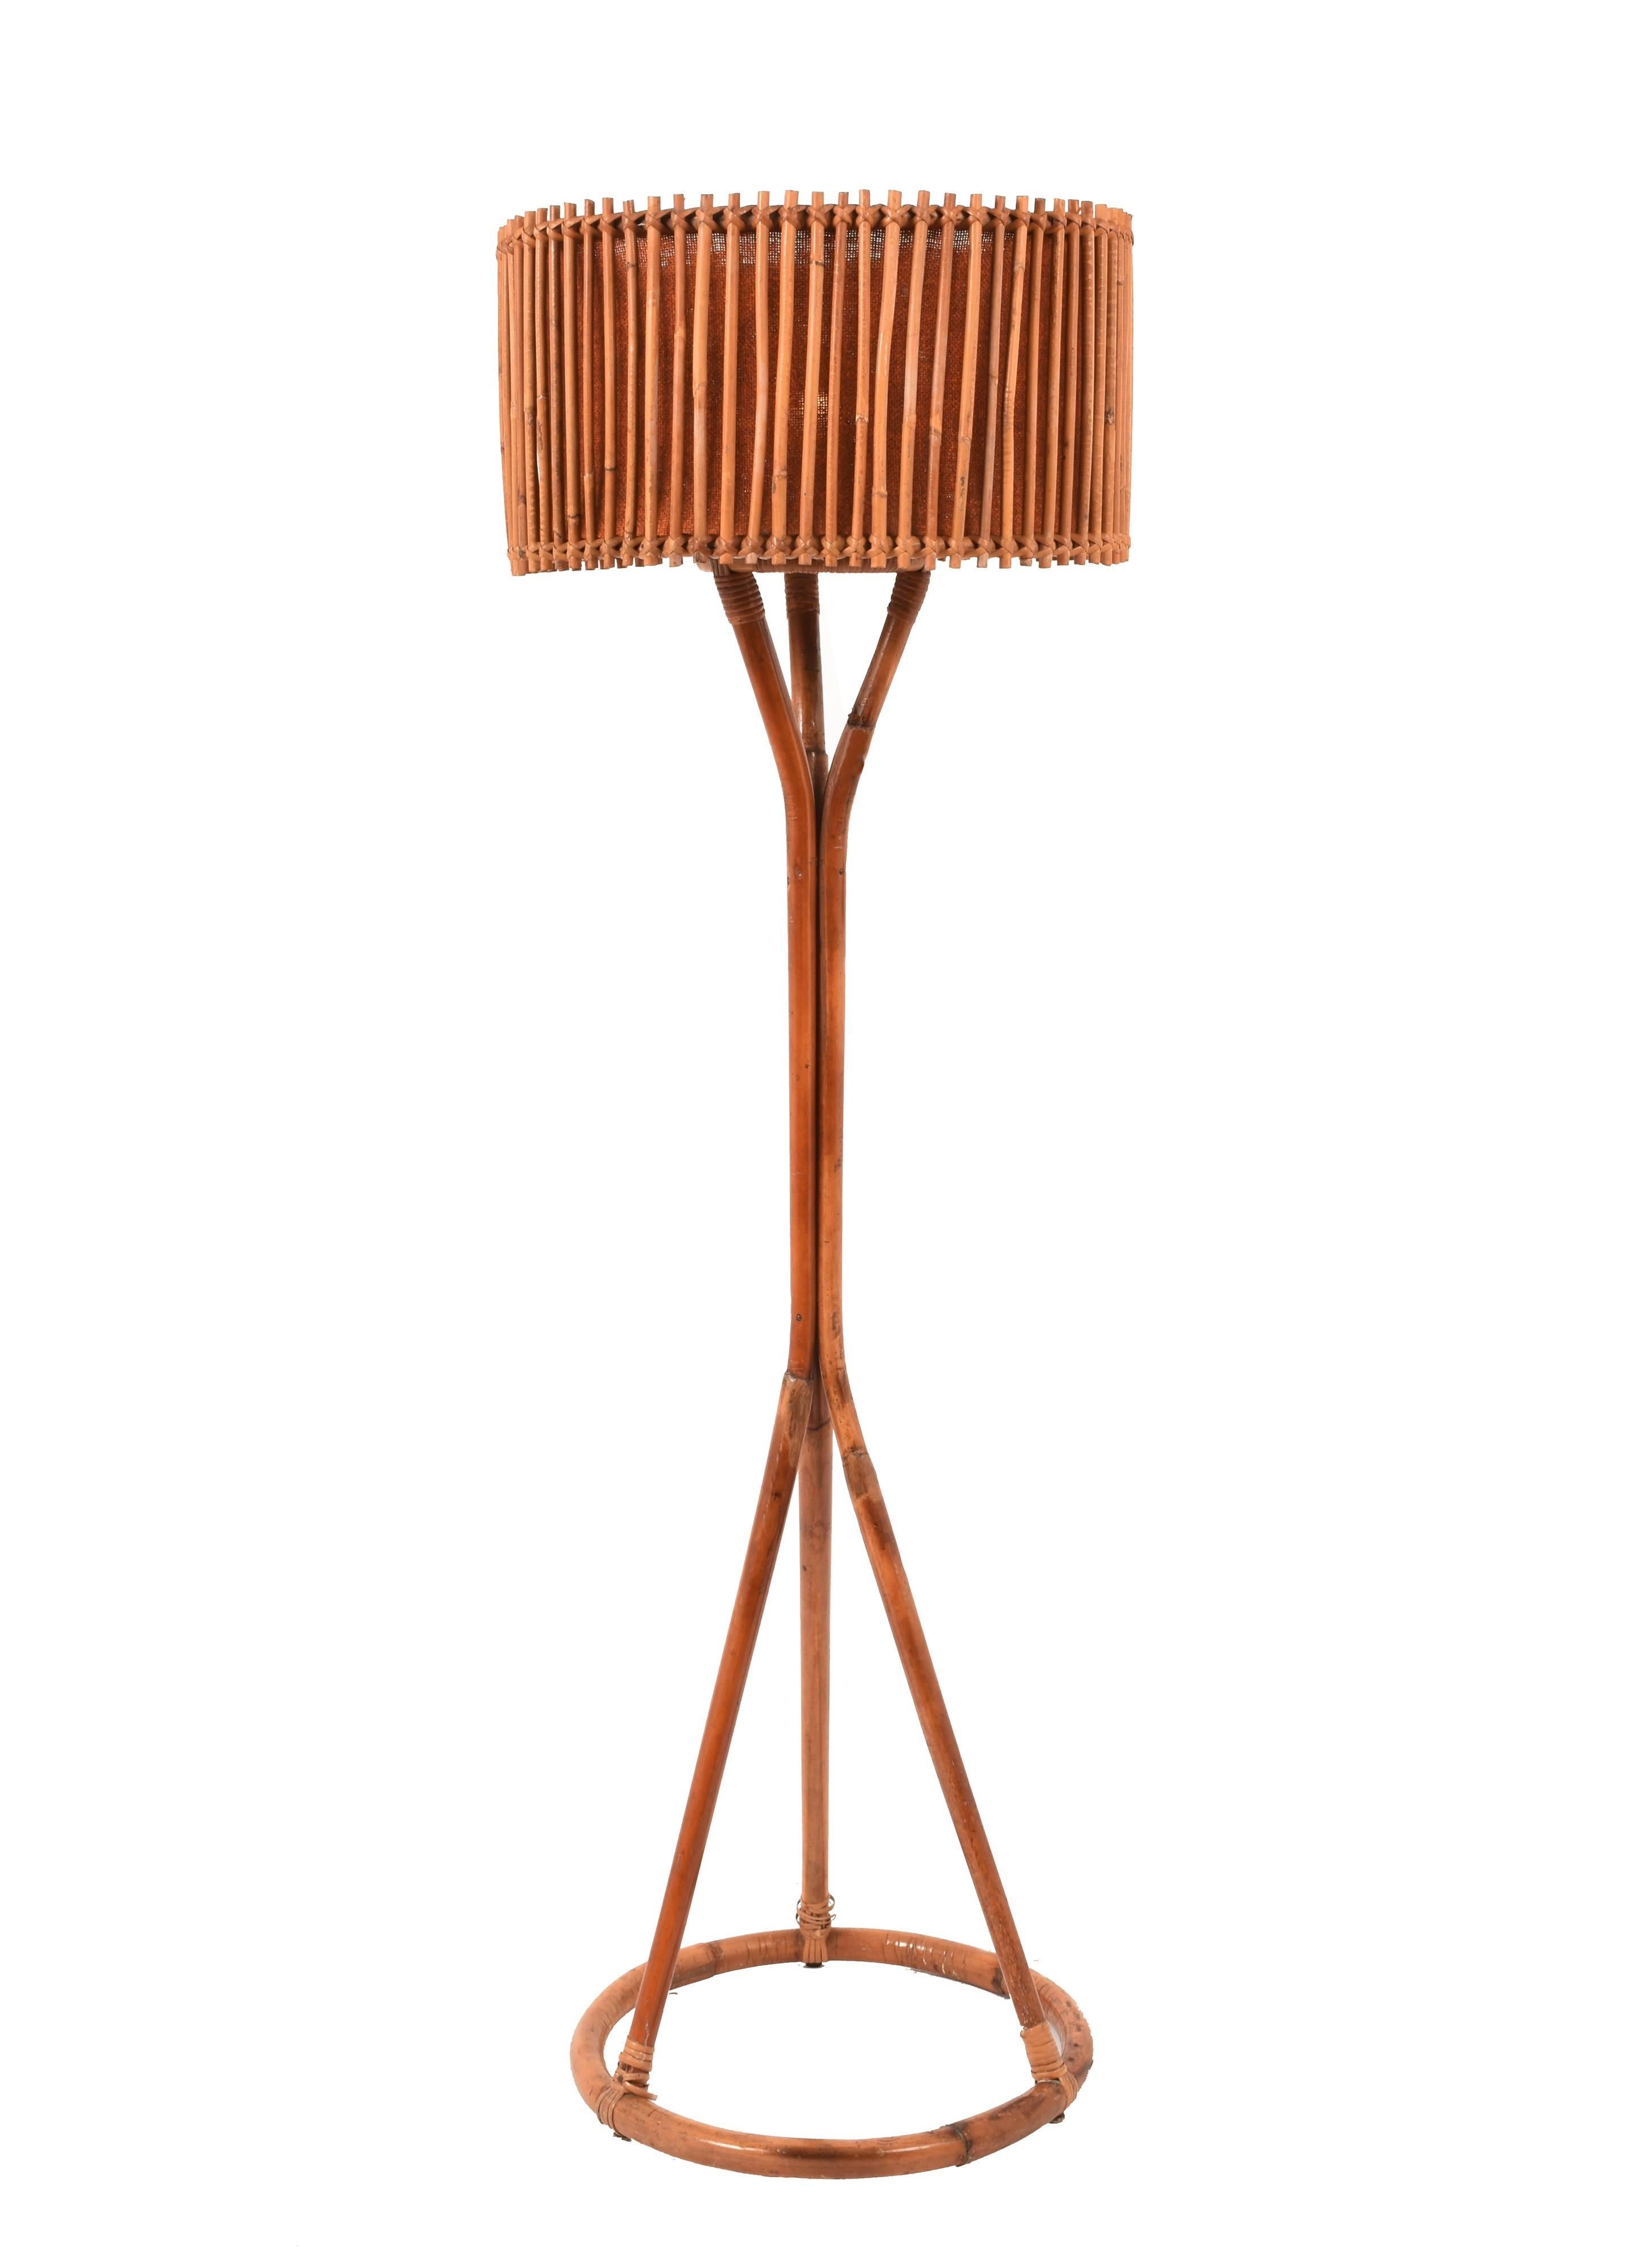 Italian Floor Lamp, Midcentury Franco Albini Style Bamboo and Rattan, Italy, 1960s